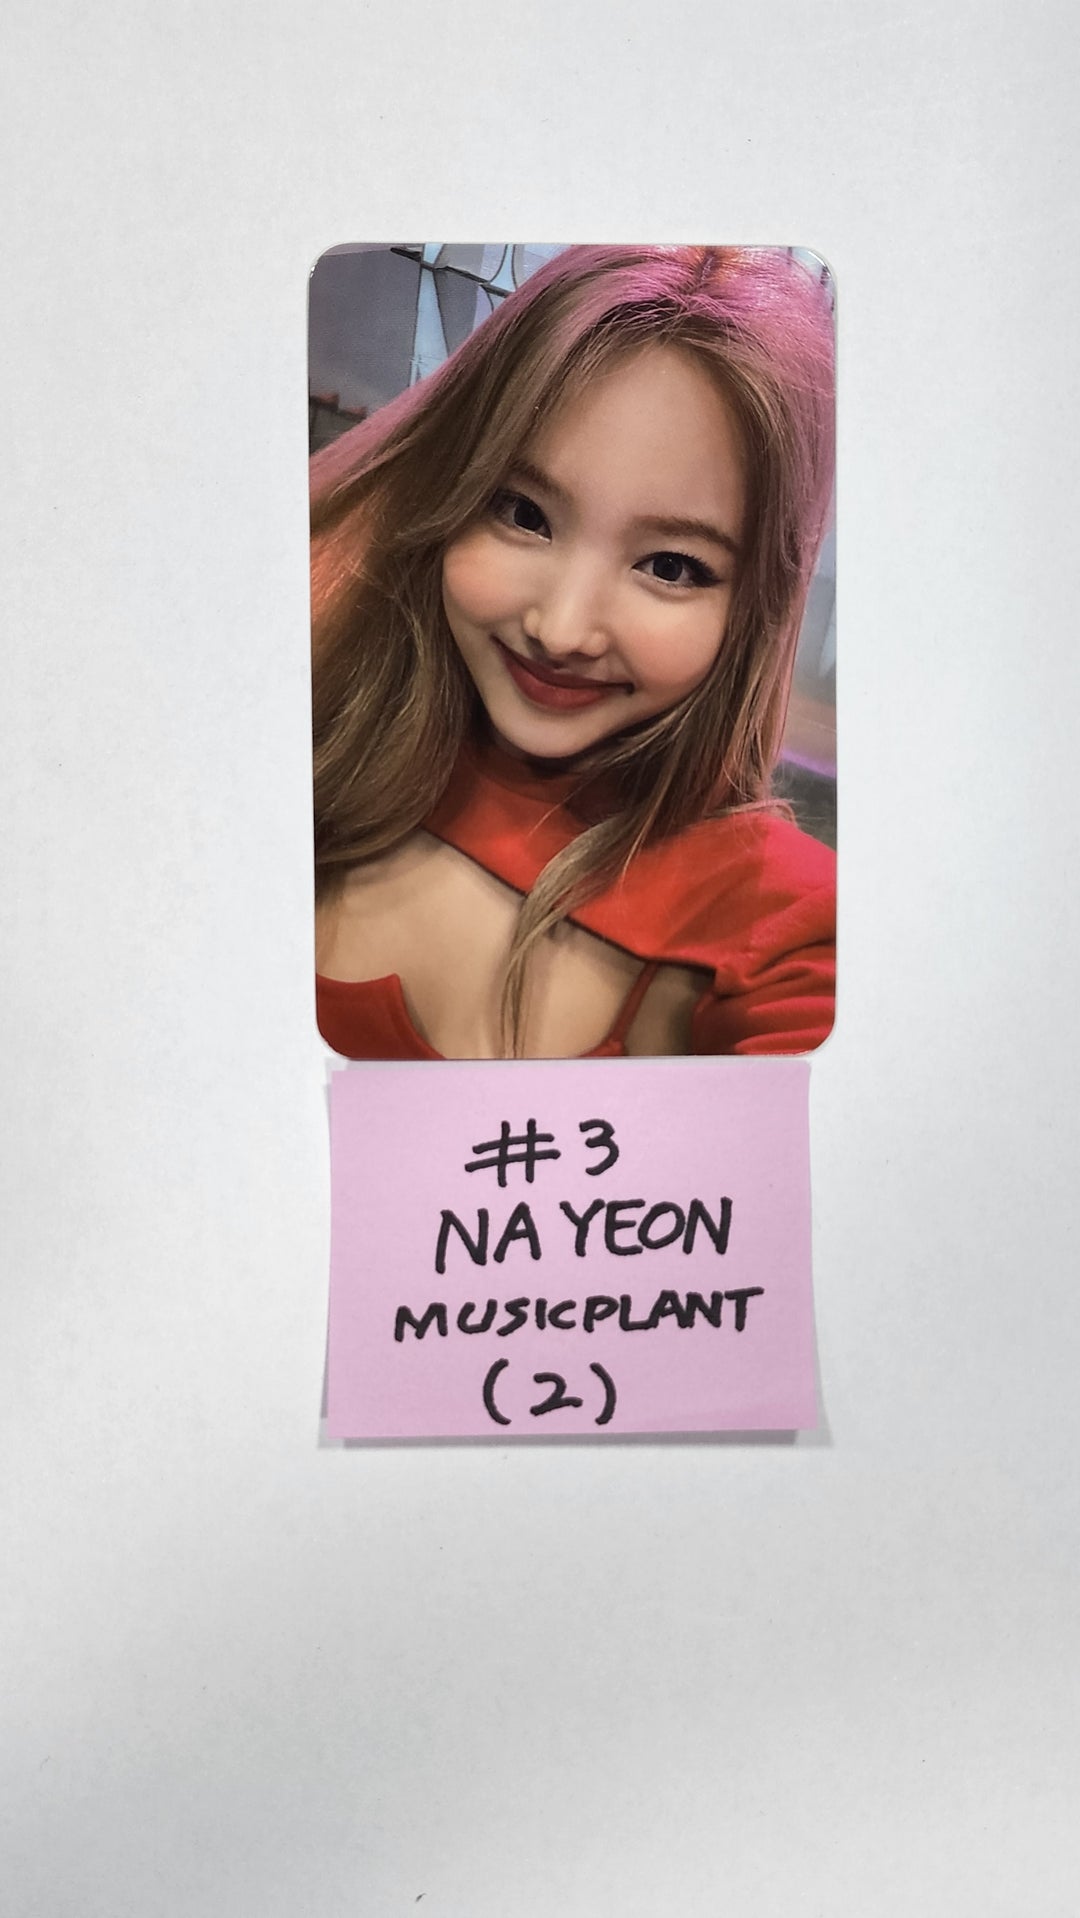 Nayeon "IM NAYEON" - Music Plant Lucky Draw Event Photocard, 2 Cut Photo